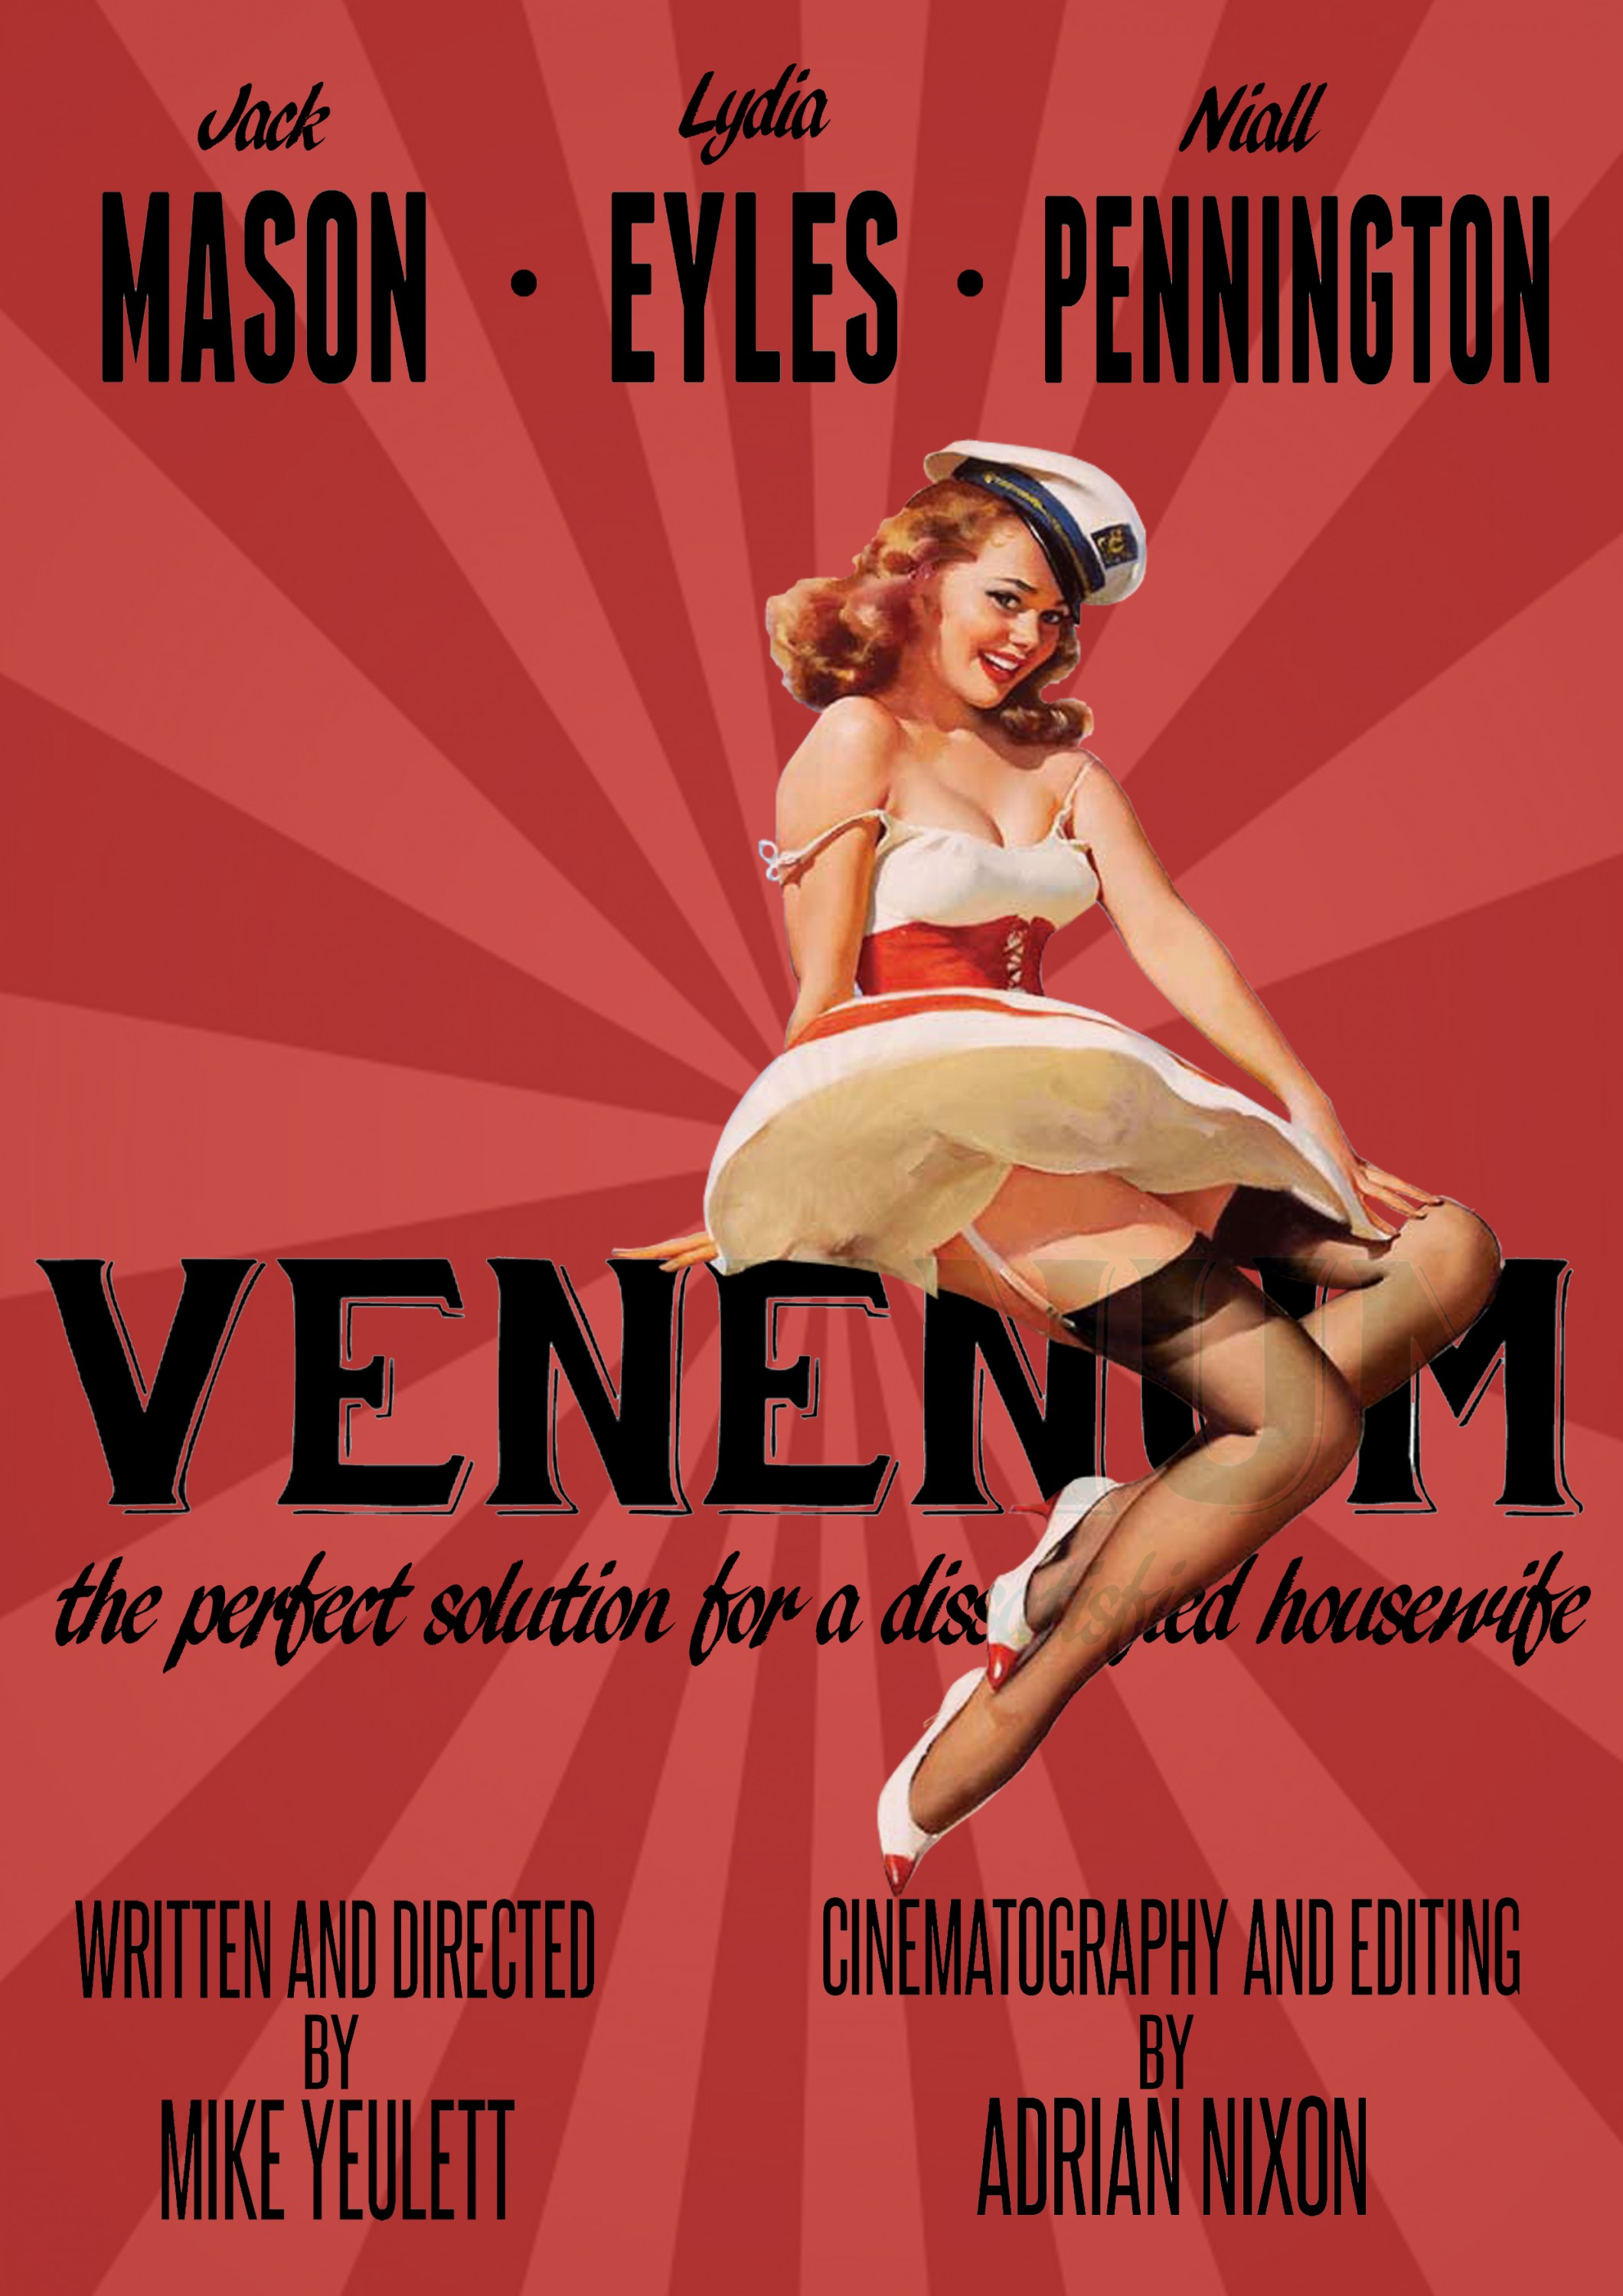 Mega Sized Movie Poster Image for Venenum